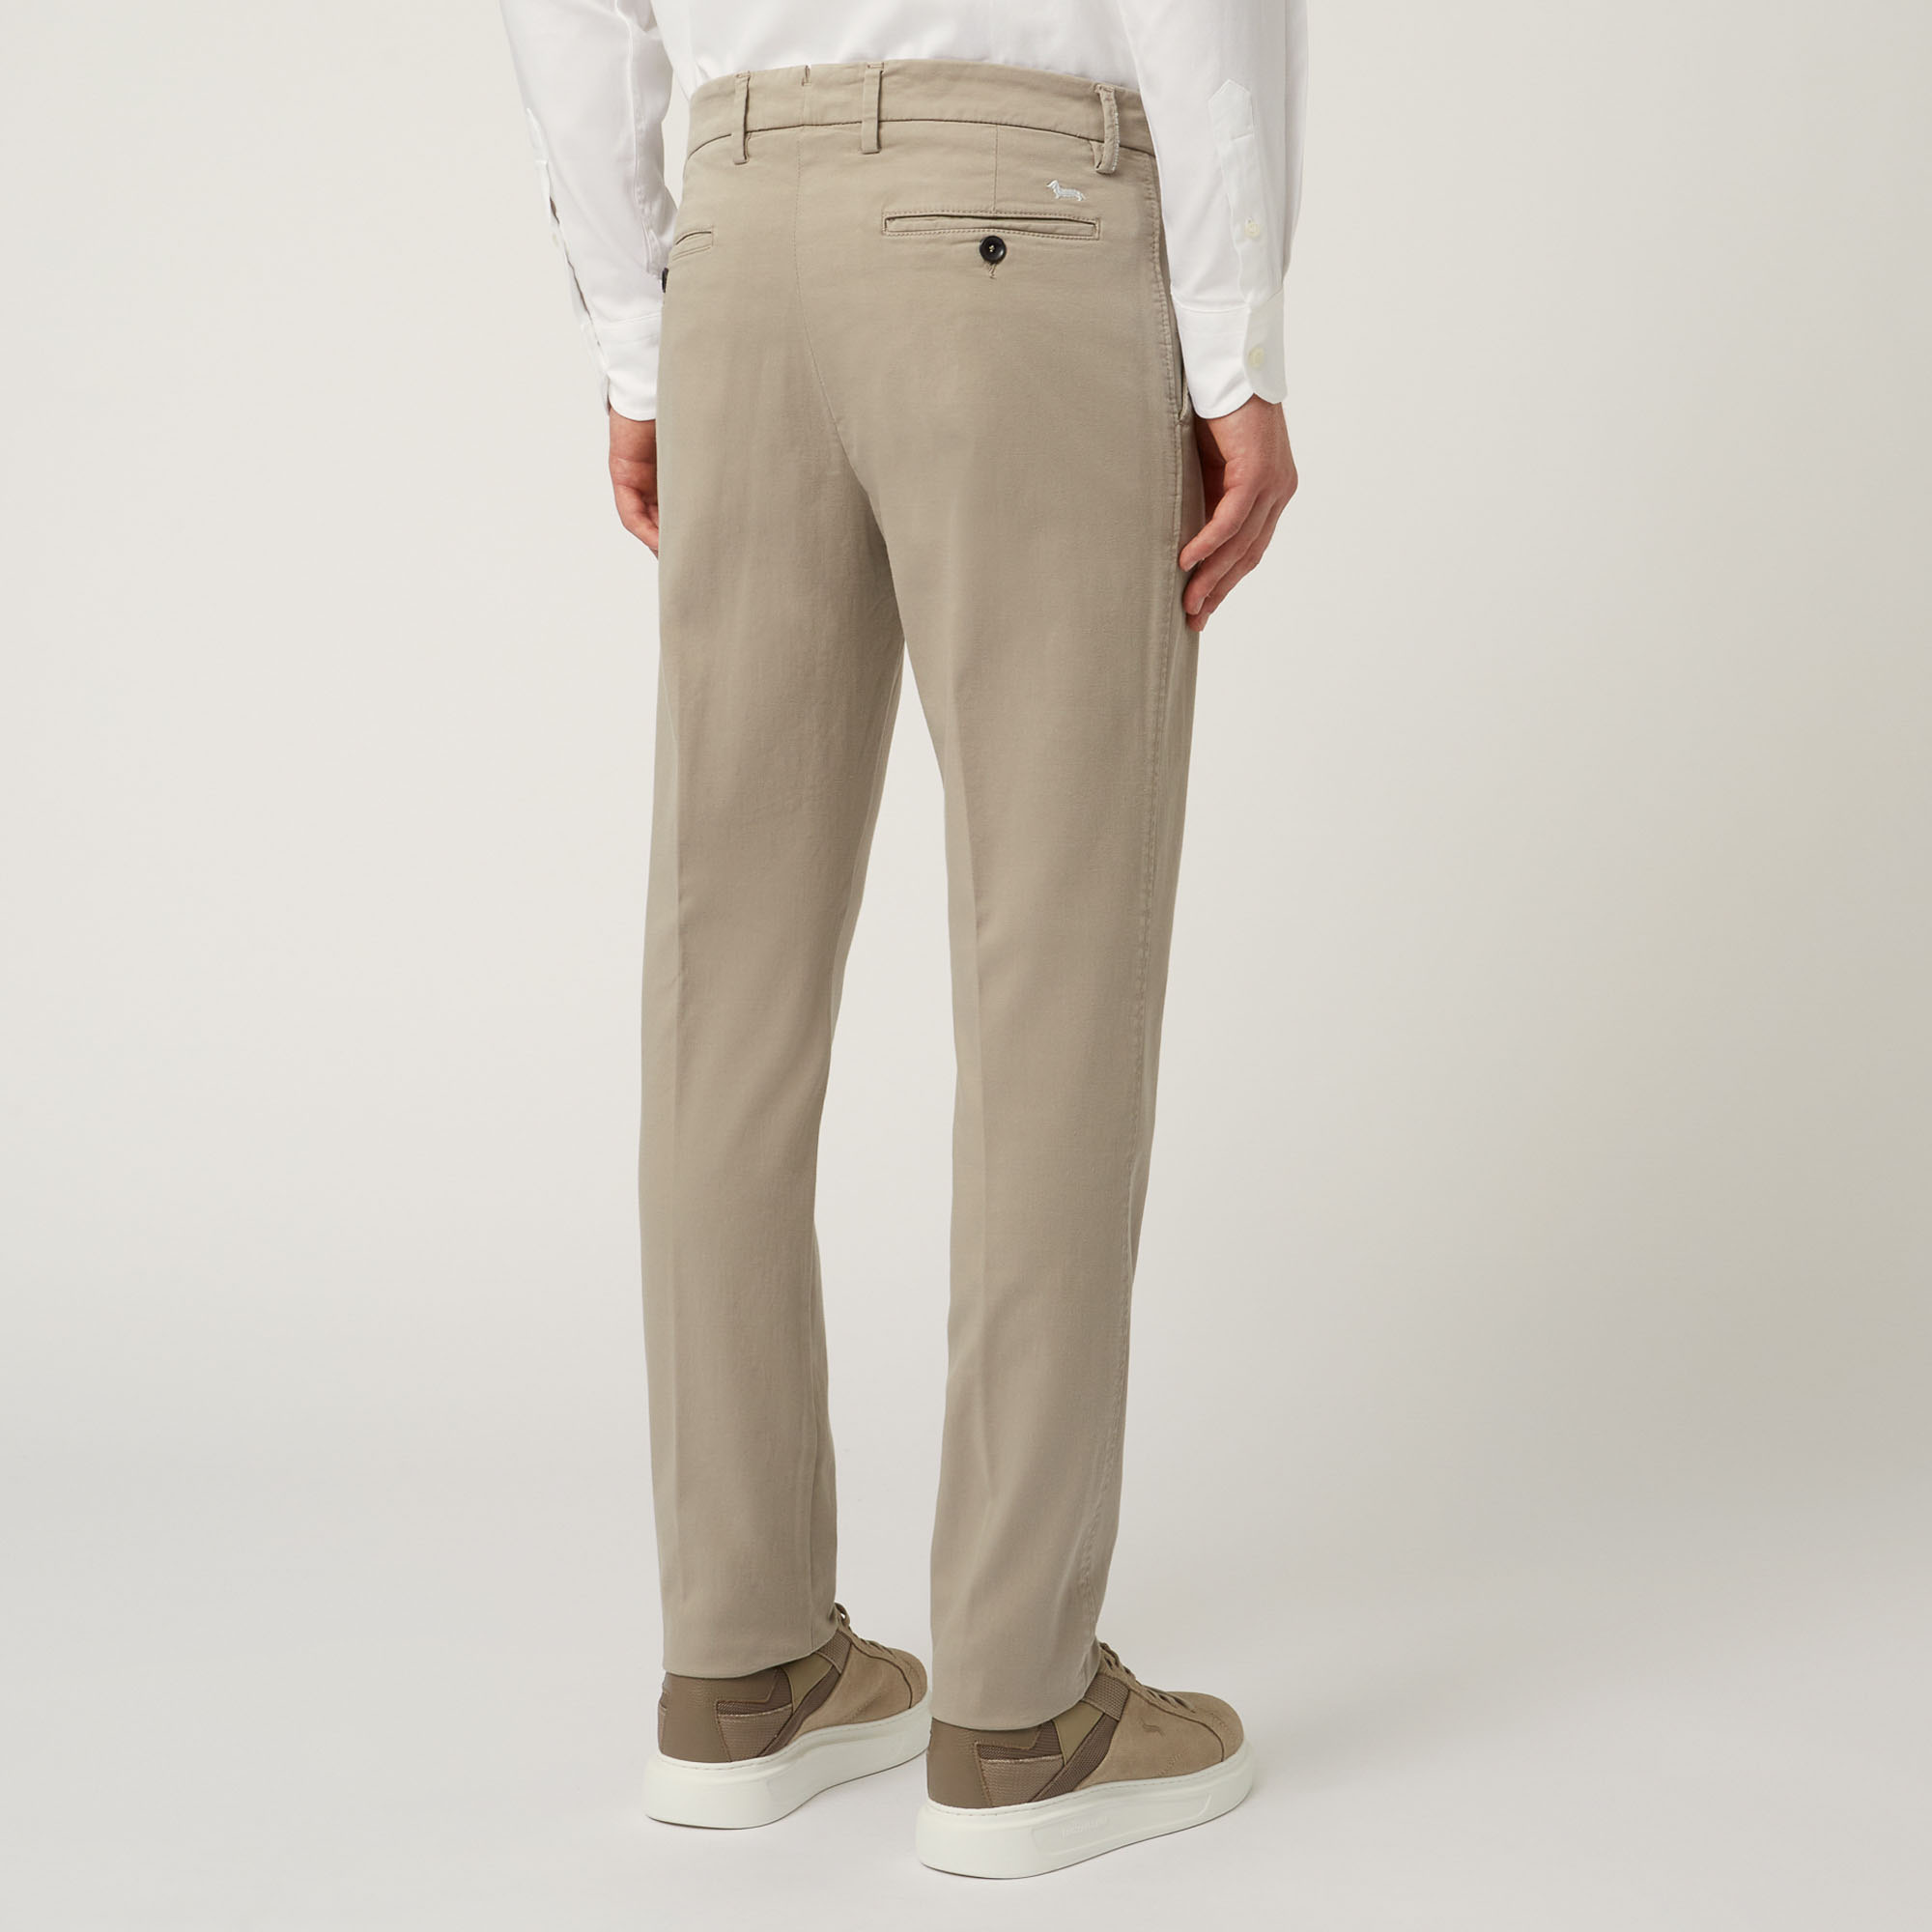 Pantalones Essentials de algodón elástico, Beige, large image number 1